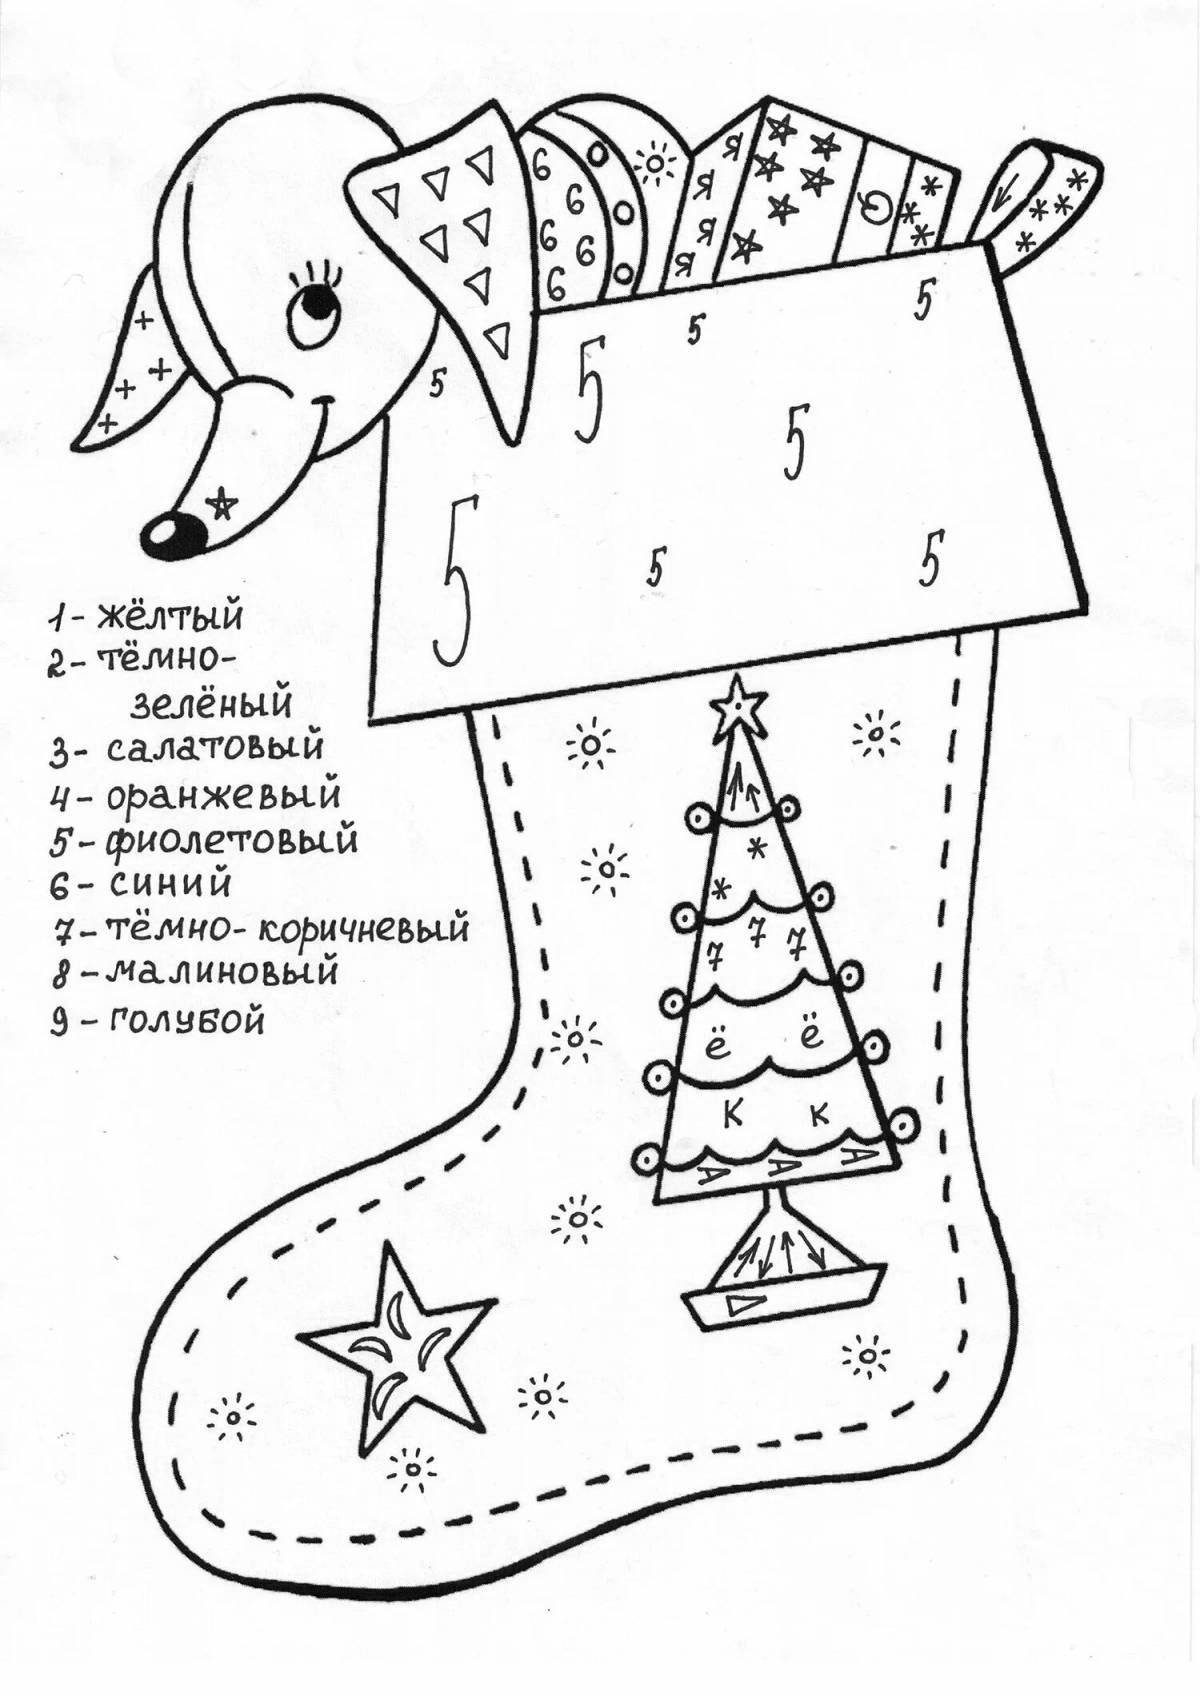 Fun Christmas math for preschoolers